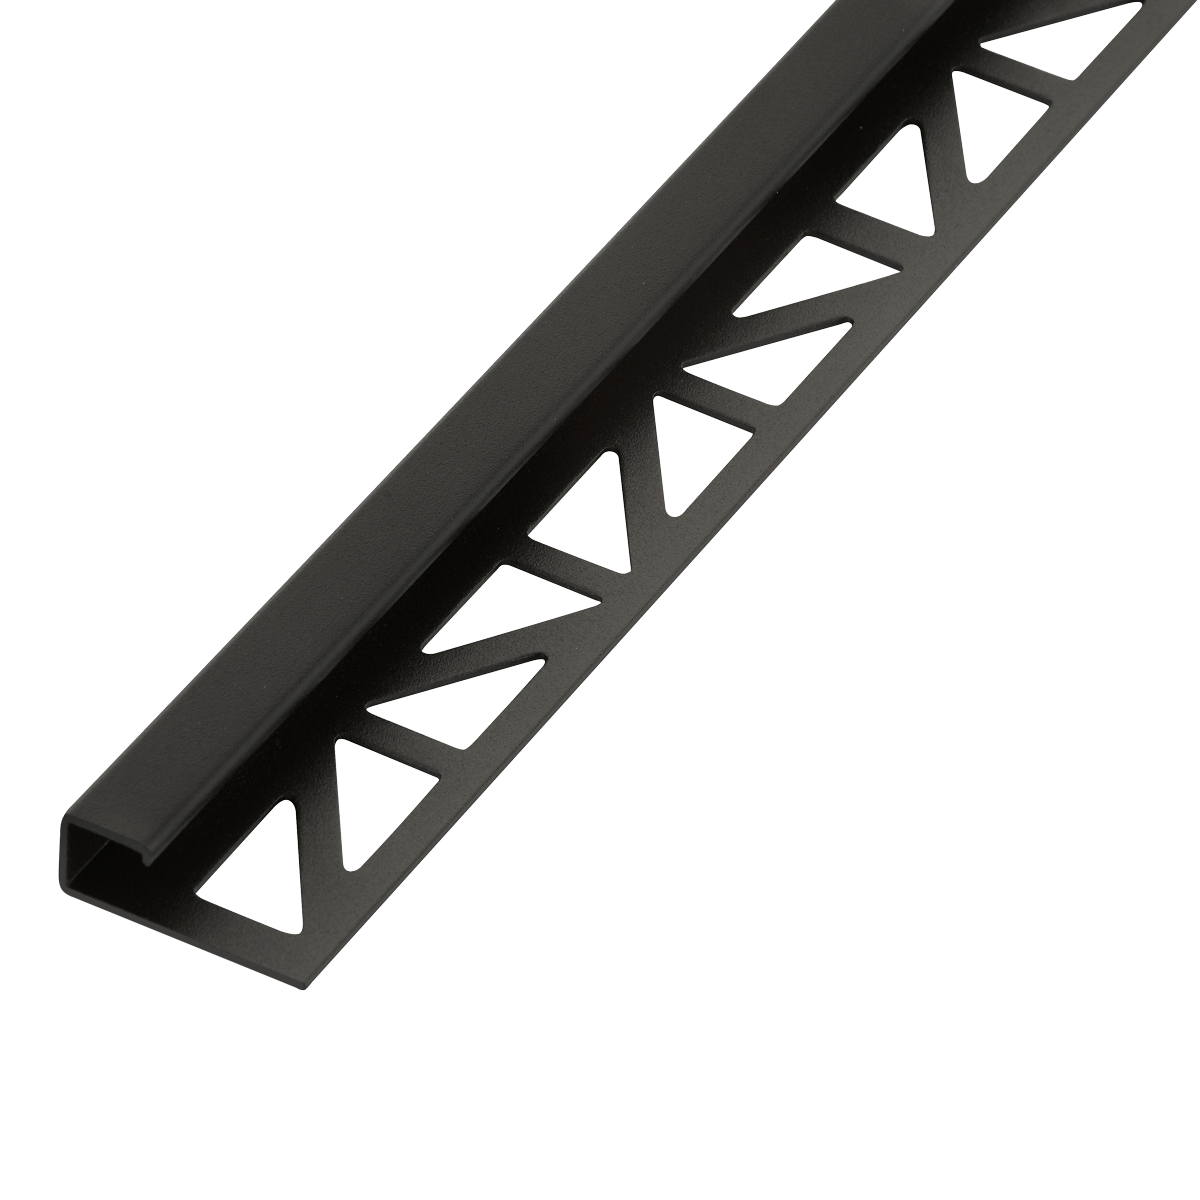 Blanke CUBELINE quadratische Form Aluminium eloxiert schwarz matt 9 mm hoch 2,5 lang